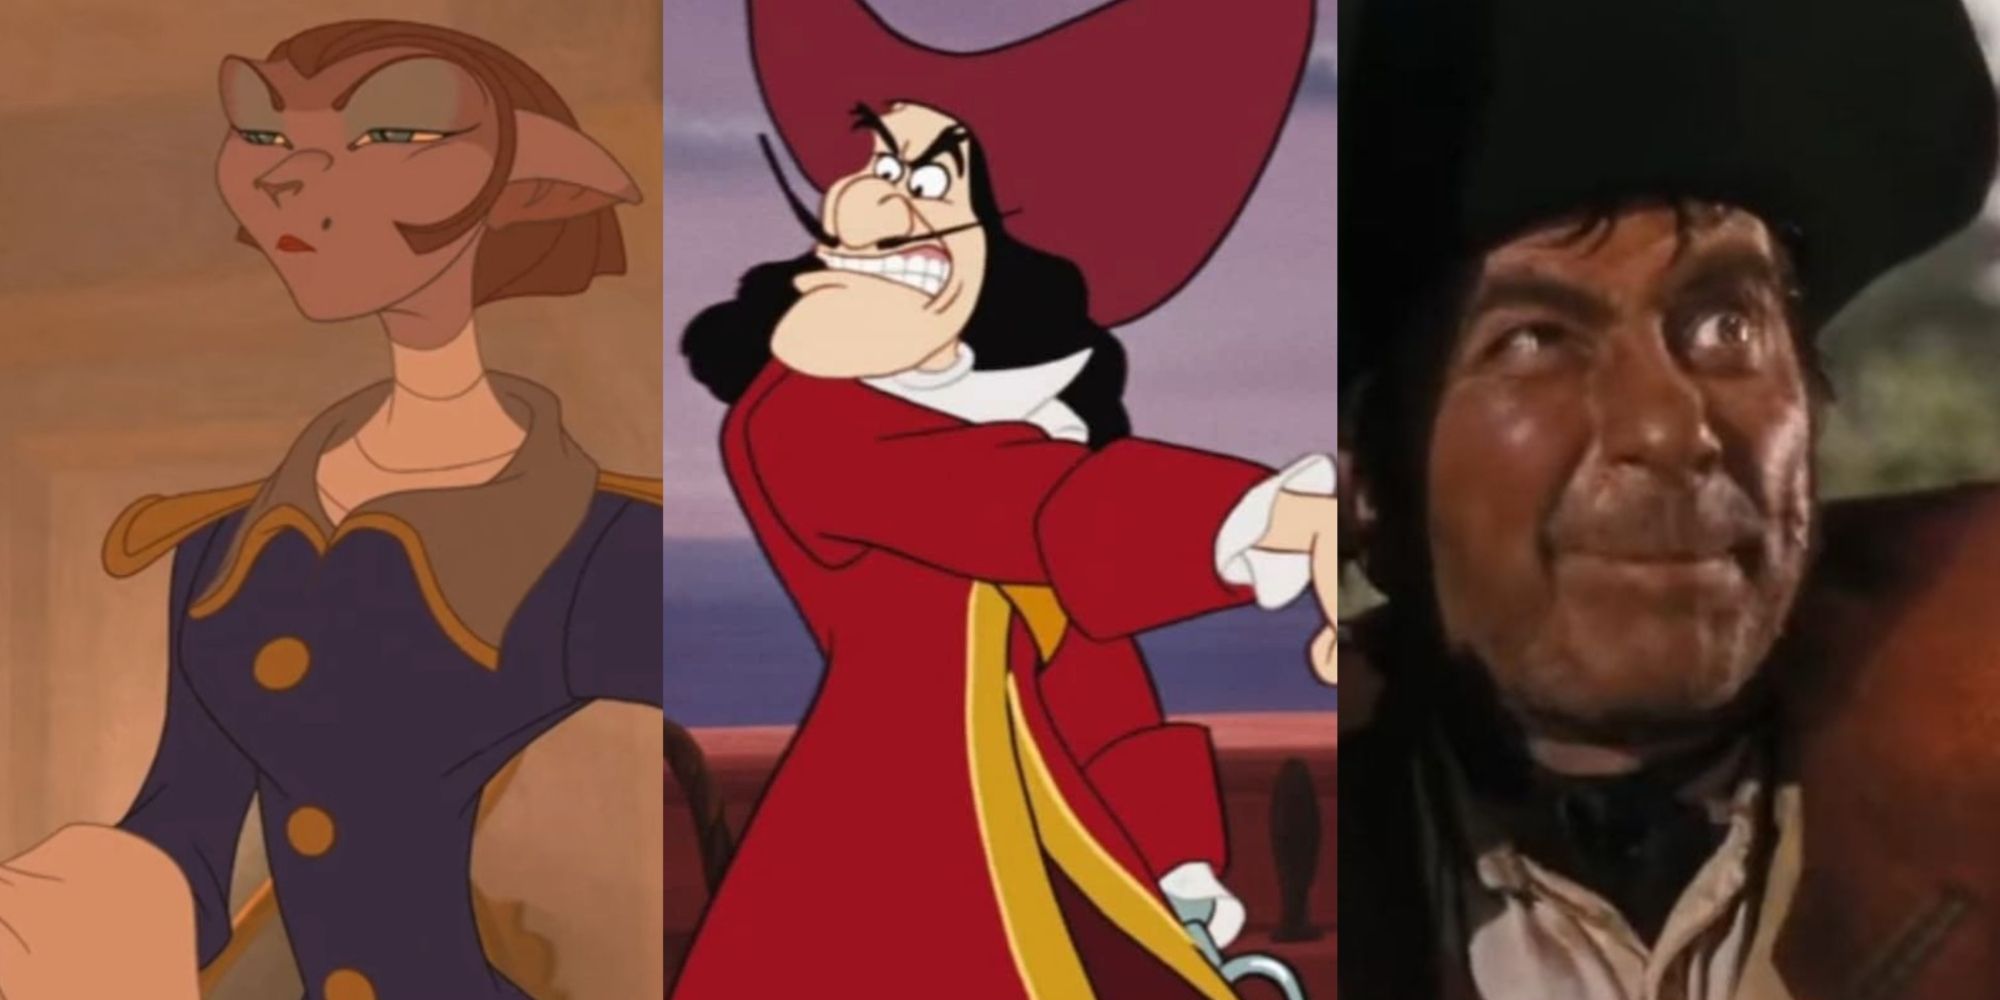 Best Disney Pirates Featured Split Image Of Captain Amelia, Captain Hook, and Long John Silver